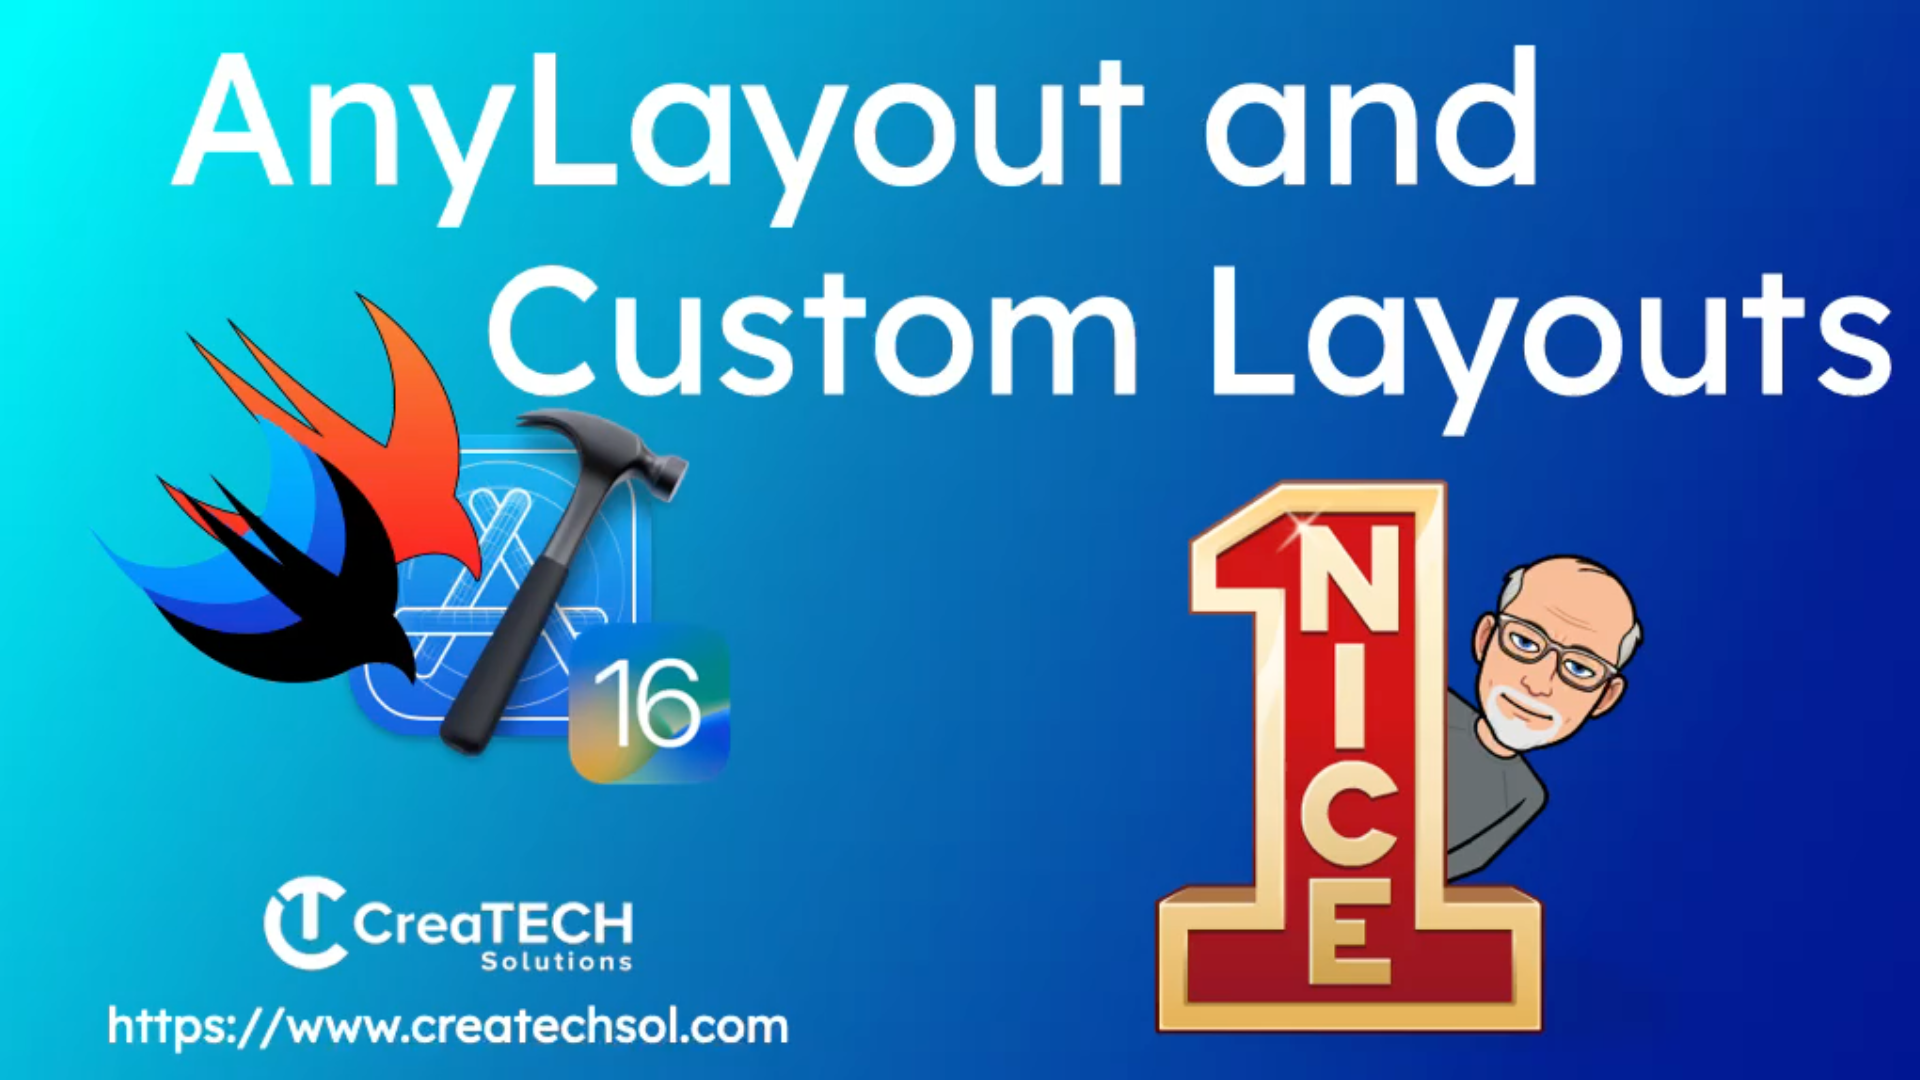 AnyLayout and Custom Layouts